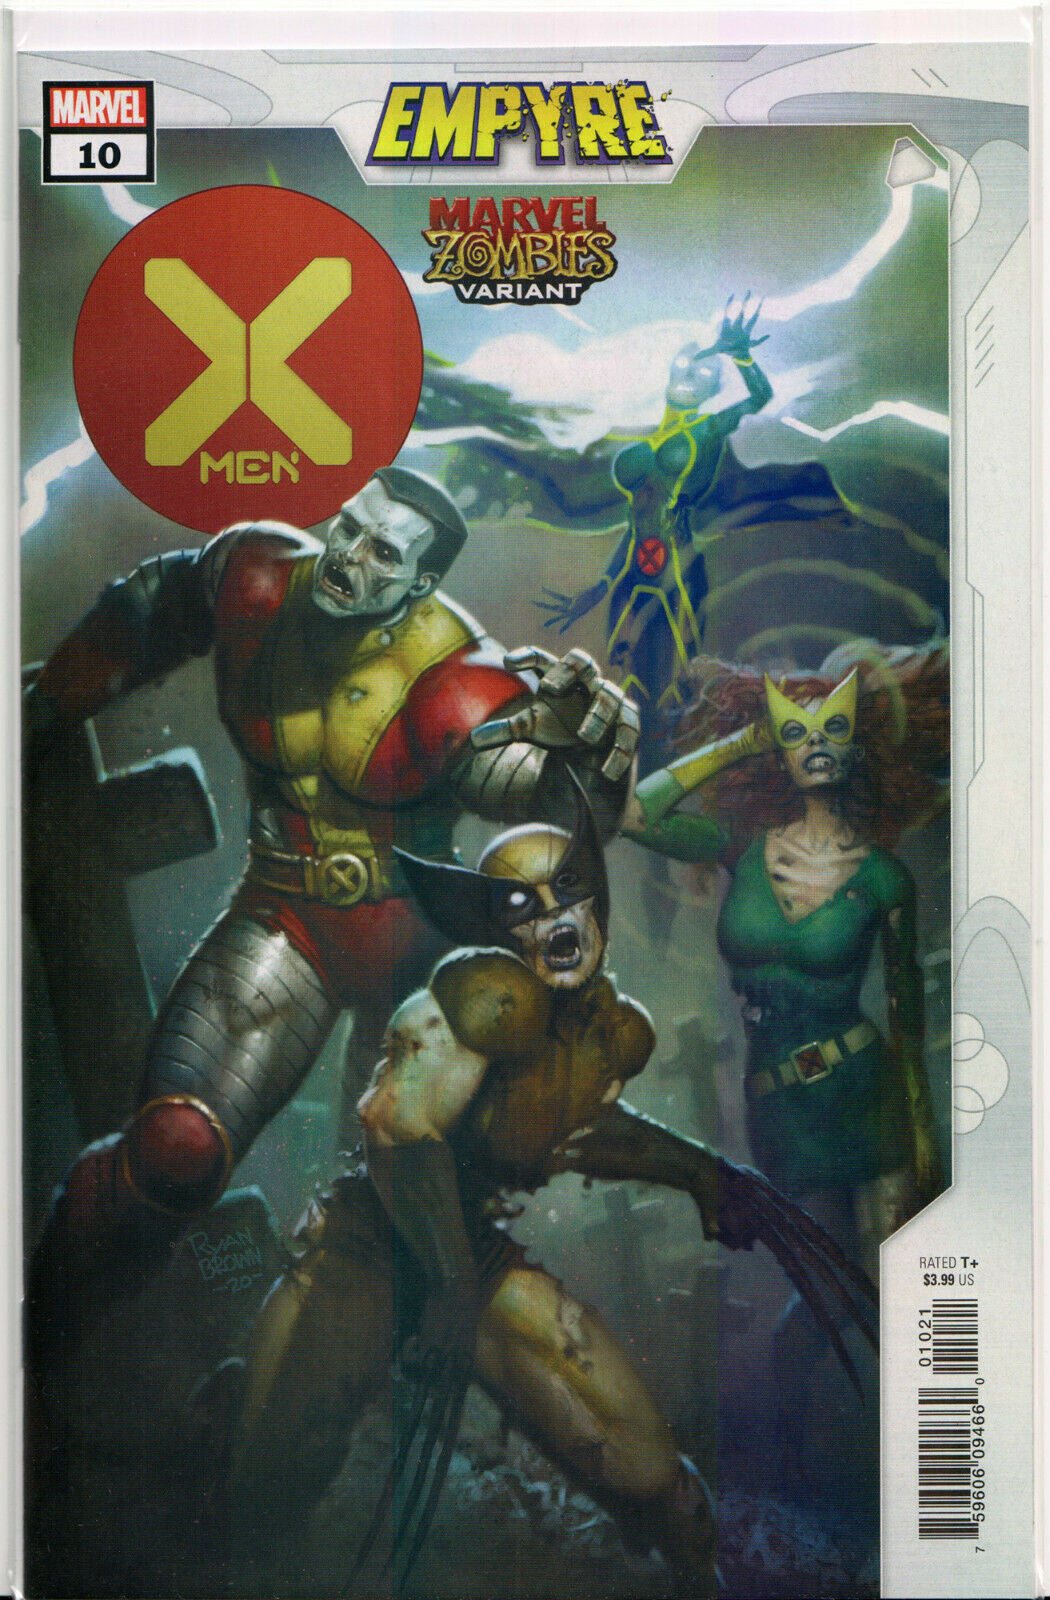 X-MEN #10 (RYAN BROWN MARVEL ZOMBIES EMPYRE VARIANT) Comic Book ~ Marvel Comics